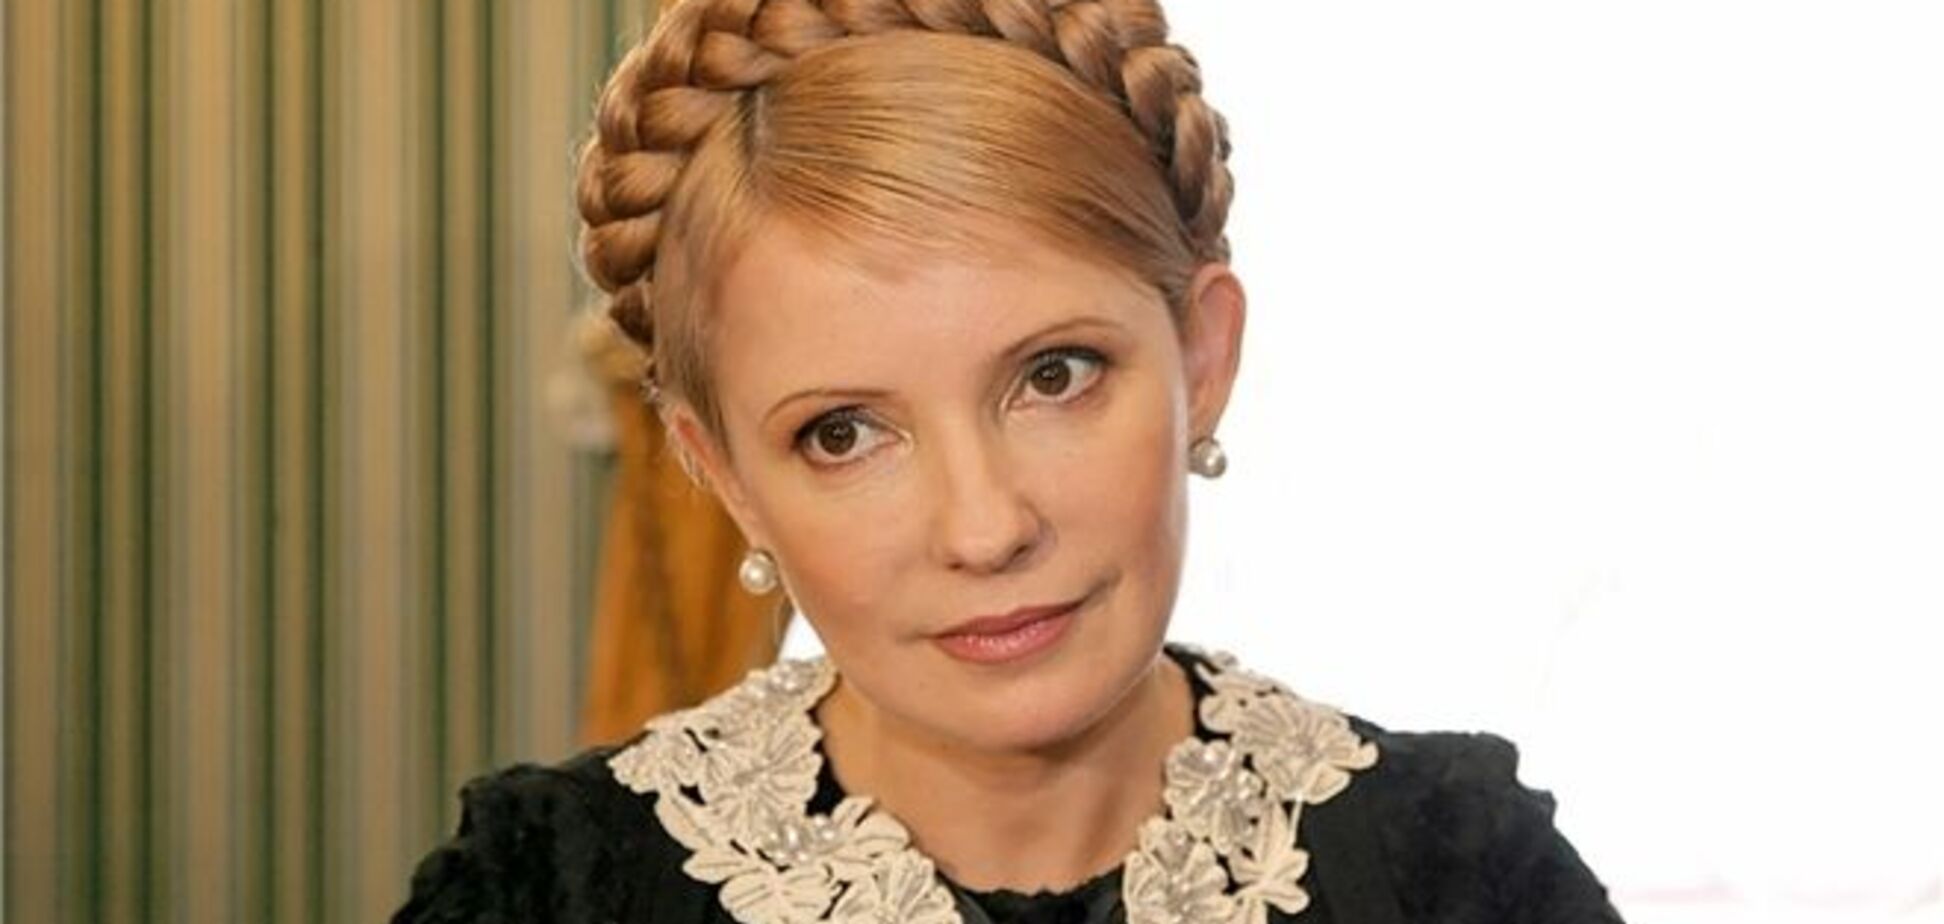 Лечение Тимошенко за границей разрешено законами - дочь